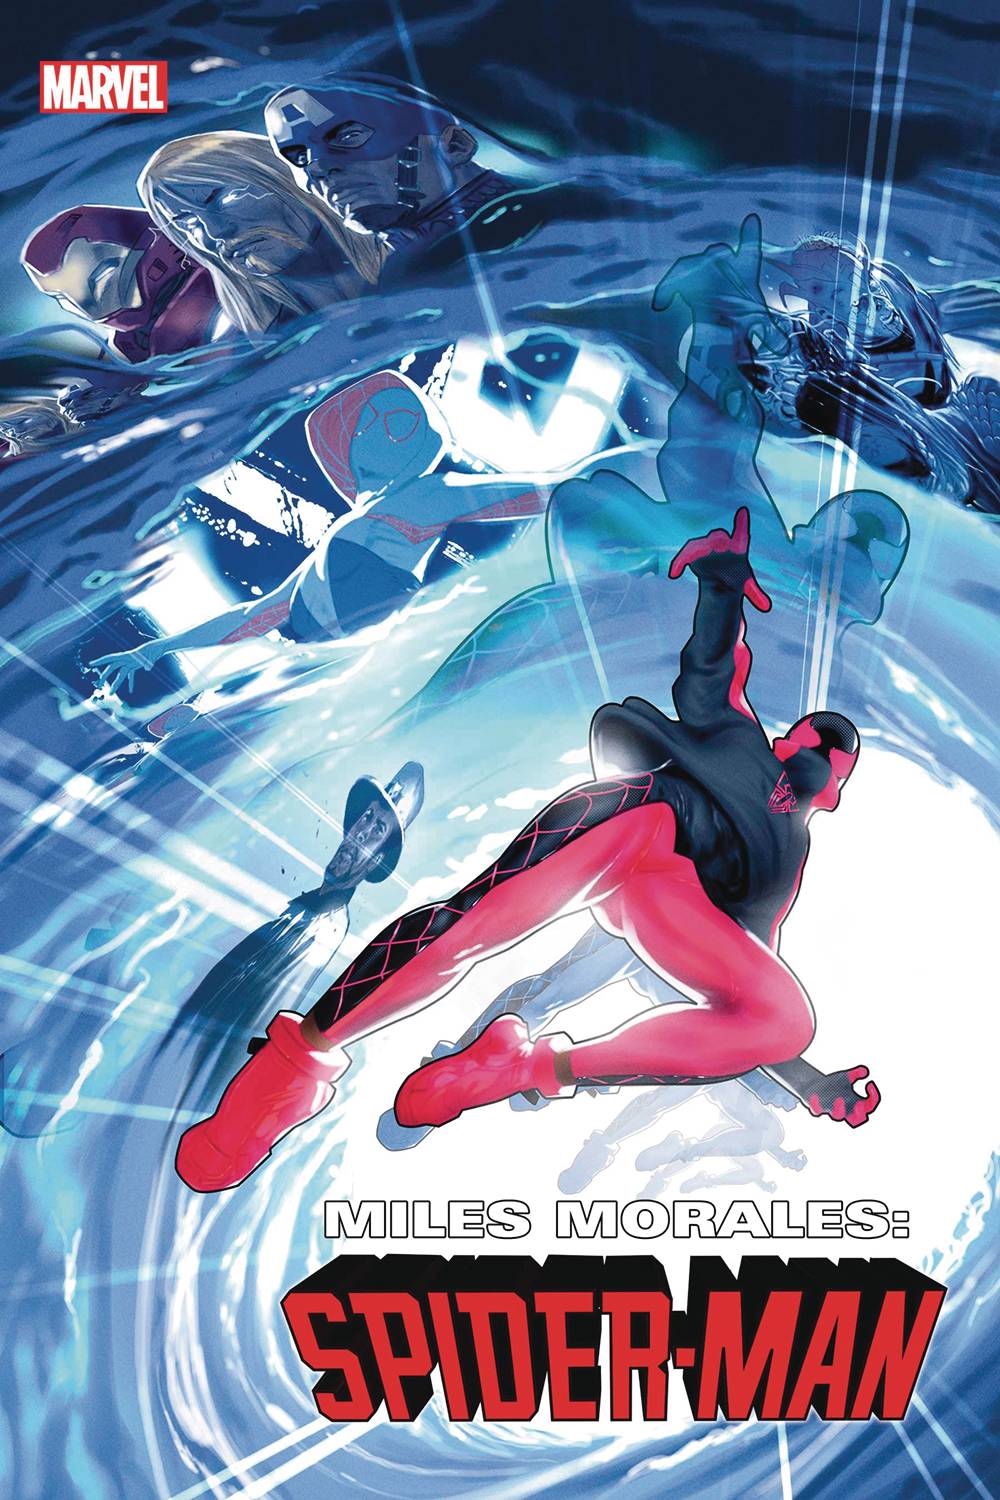 MILES MORALES SPIDER-MAN #36